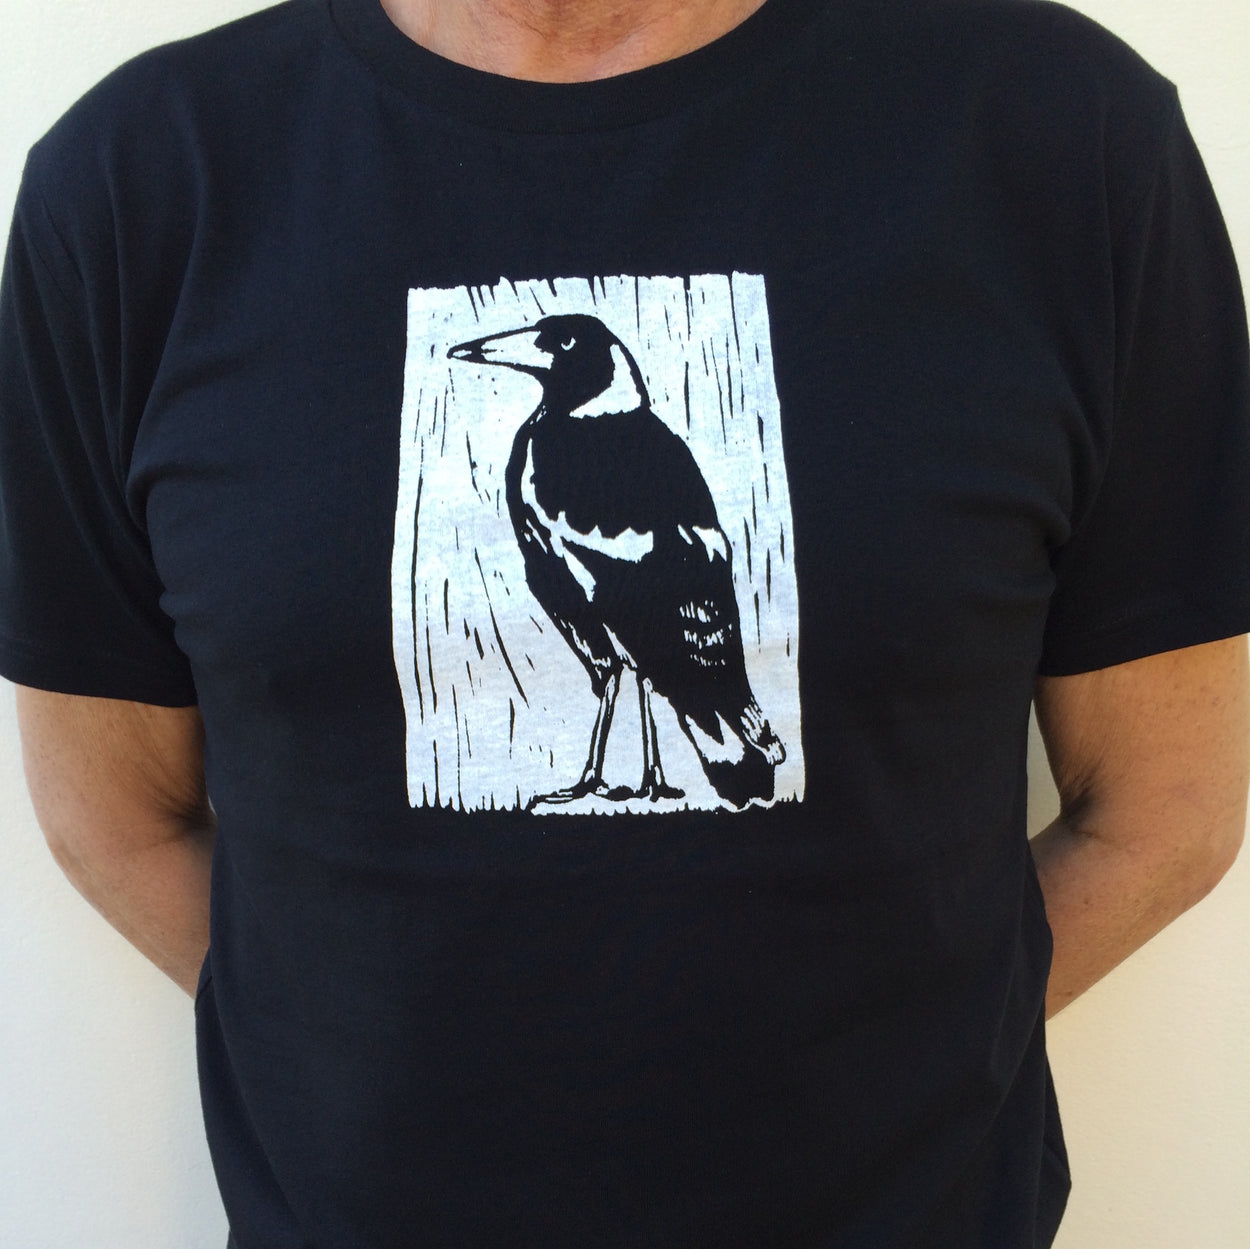 Photograph of screenprinted t-shirt depicting an Australian Magpie.